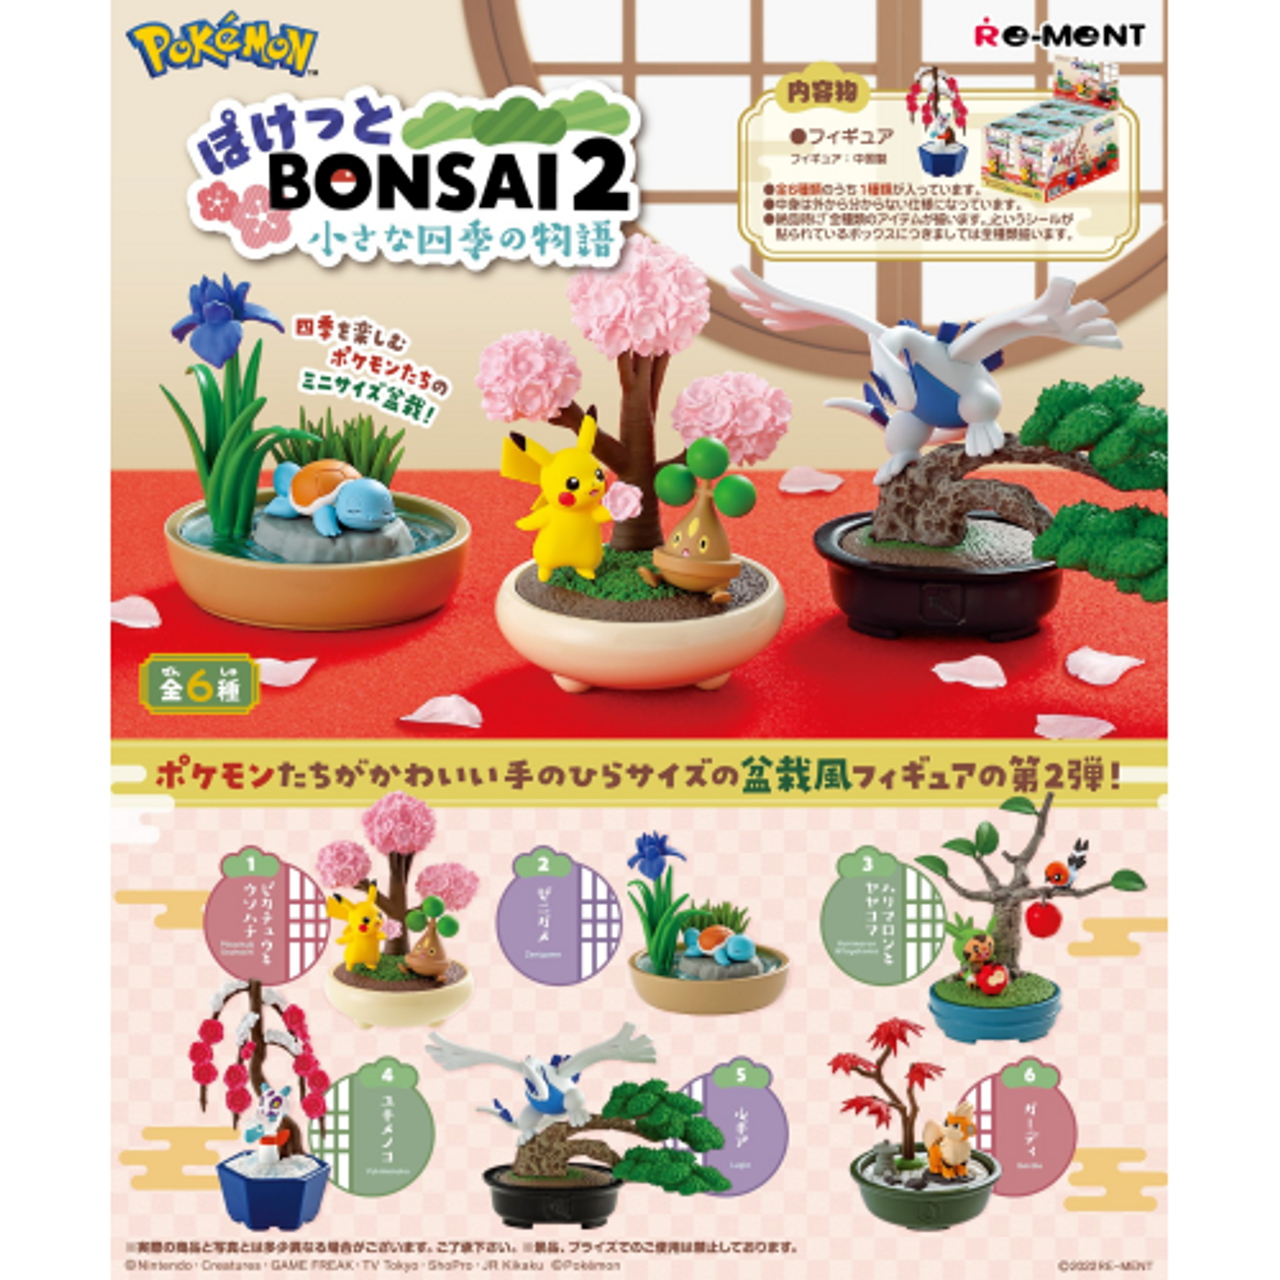 Re-ment Pokemon Pocket Bonsai2 Little Stories in 4 seasons 6 Pcs Complete  Box